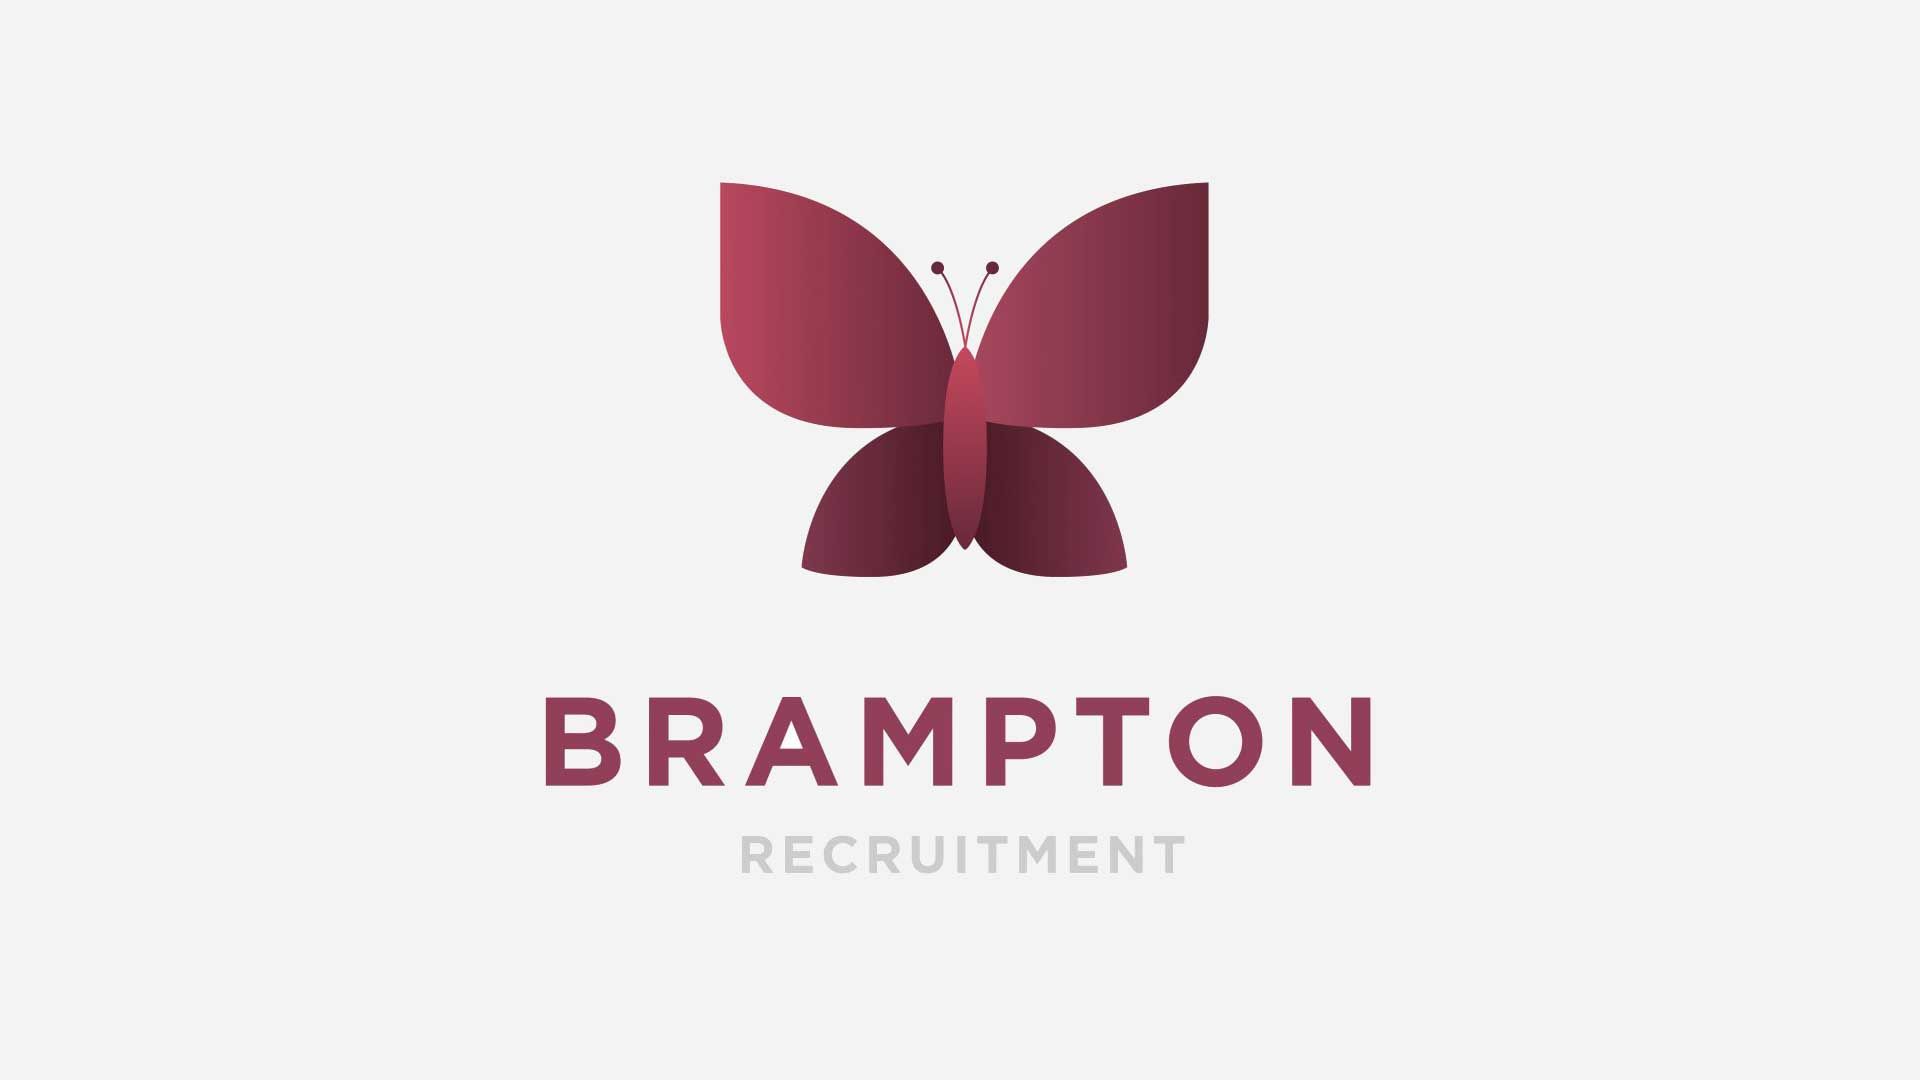 Brampton recruitment logo